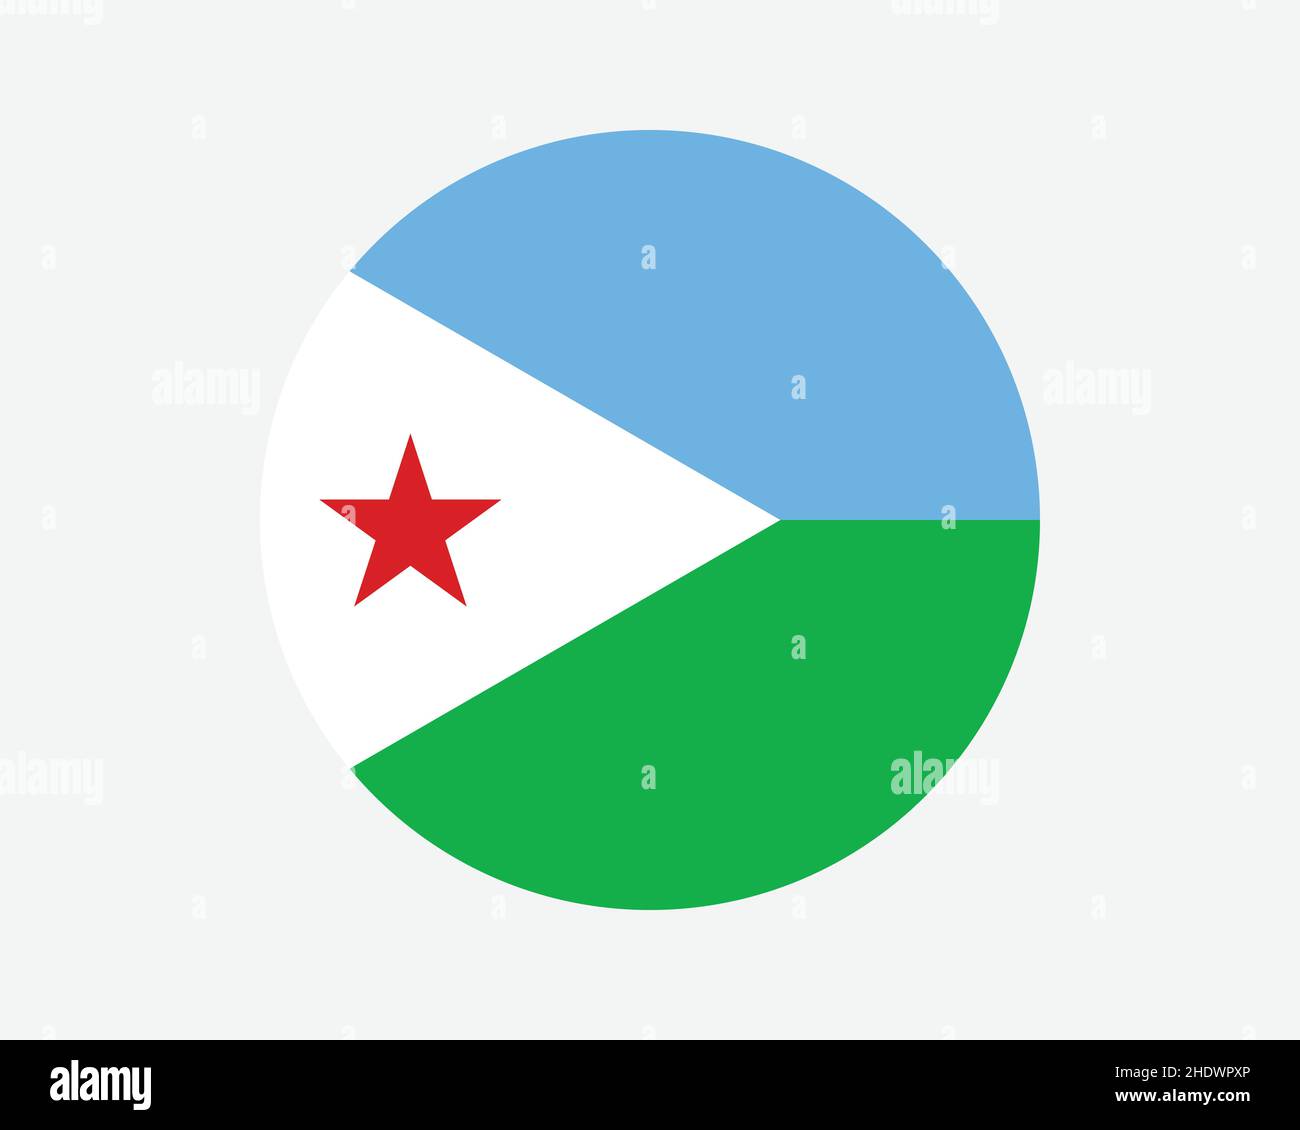 Djibouti Round Country Flag. Circular Djiboutian National Flag. Republic of Djibouti Circle Shape Button Banner. EPS Vector Illustration. Stock Vector